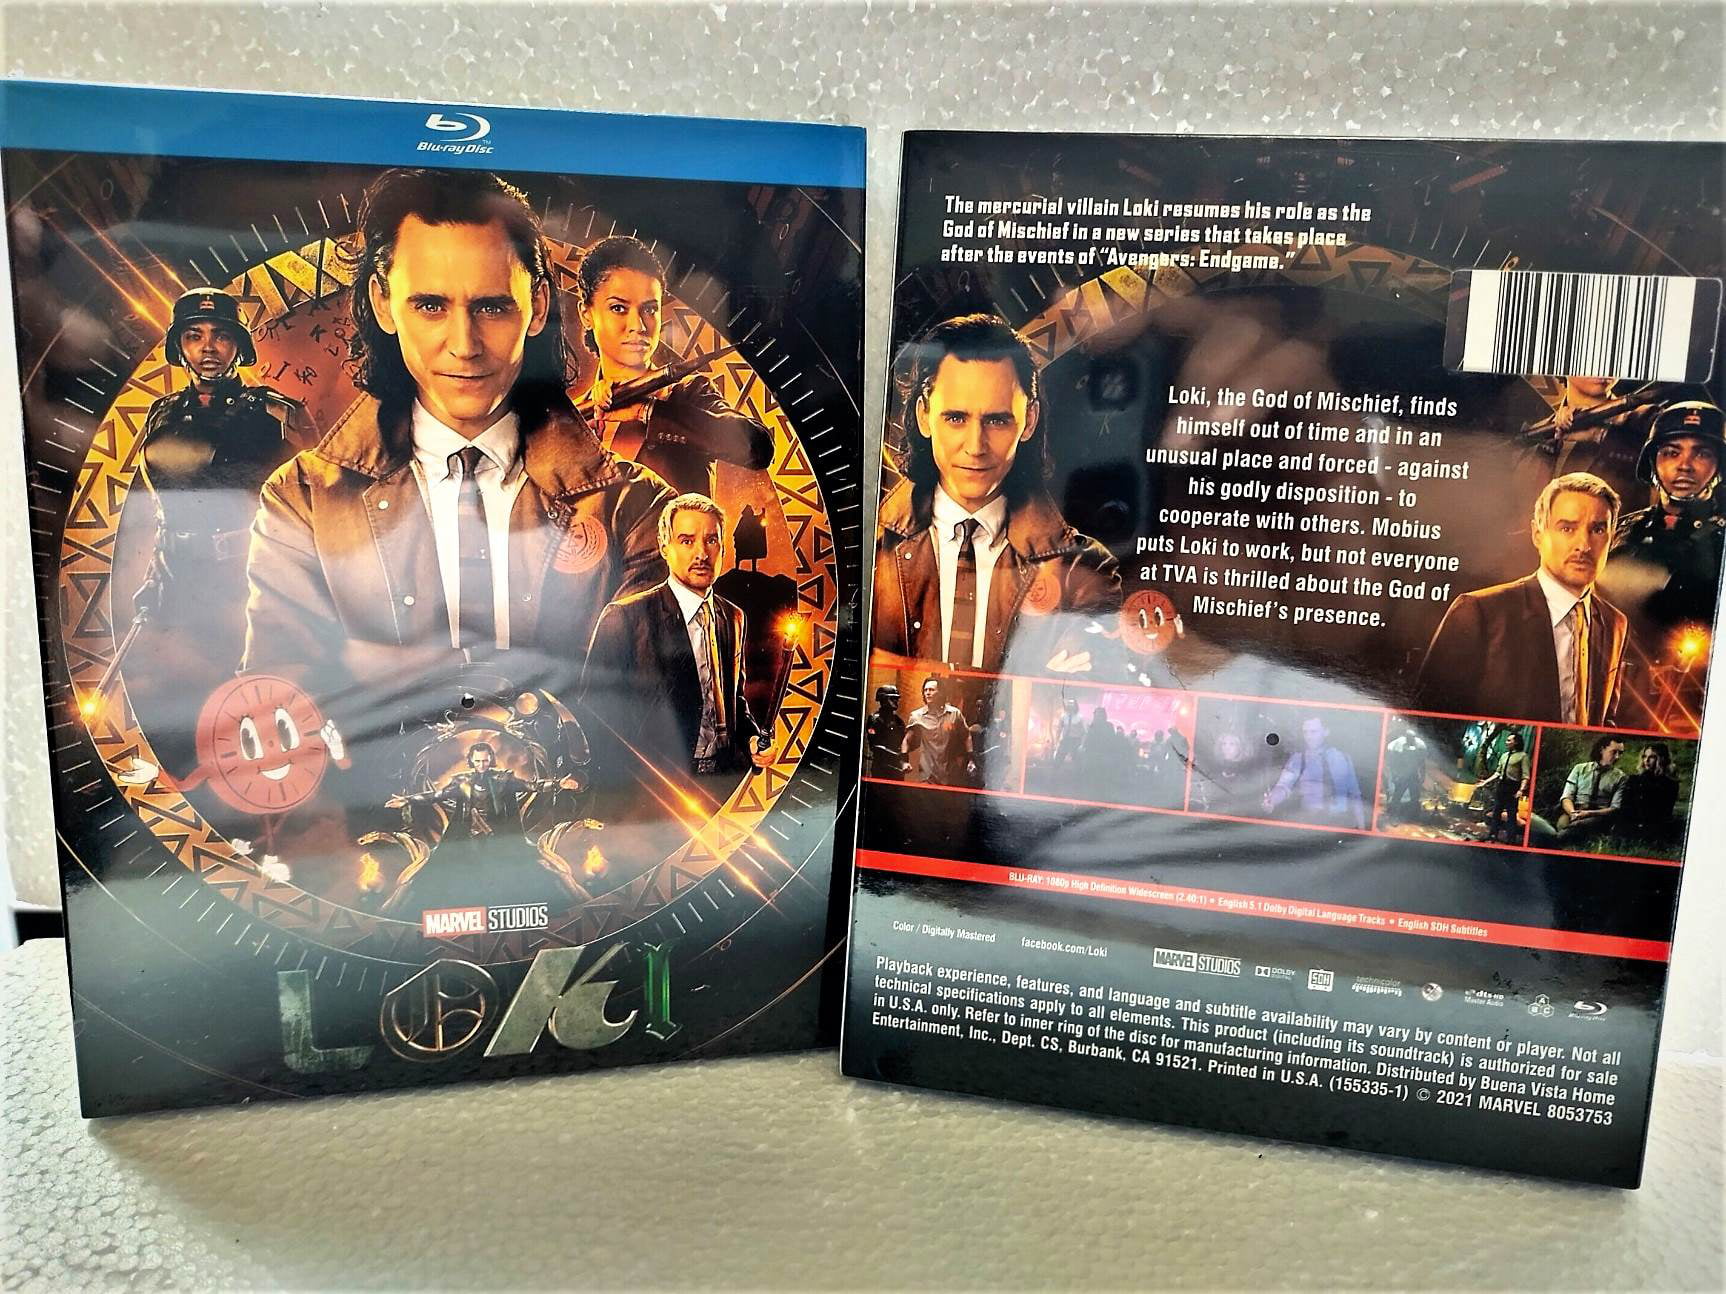 Loki Season 2 Custom Blu-ray Cover W/ Case NO DISC 